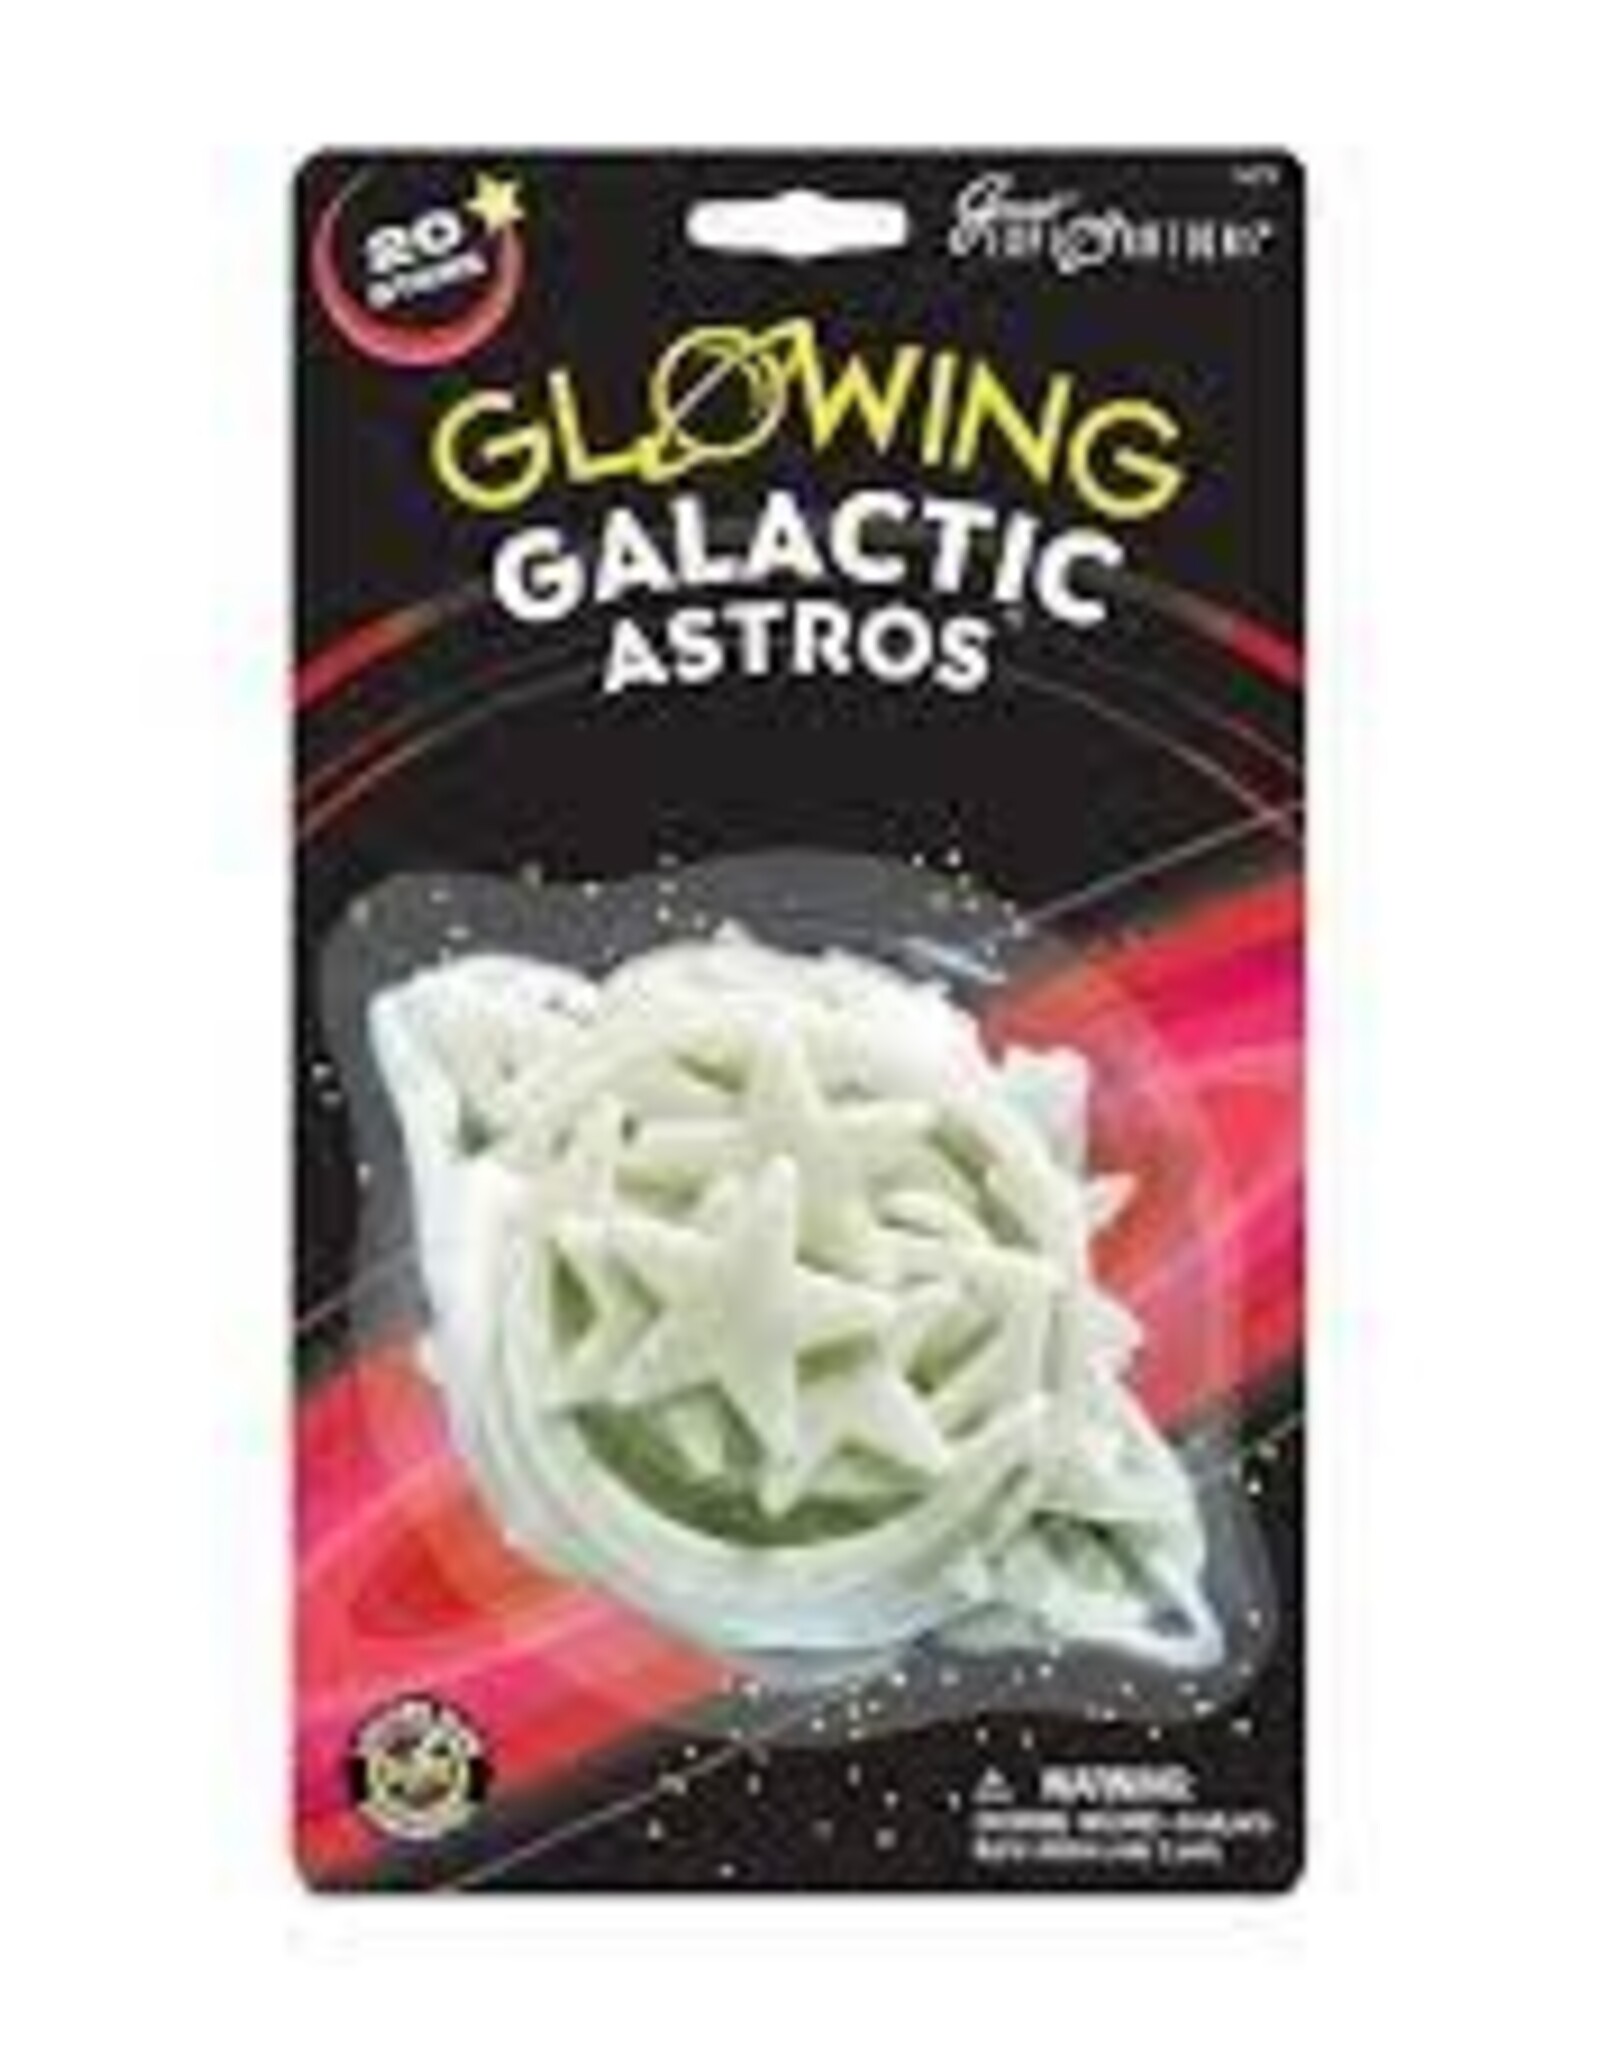 Galactic Astros